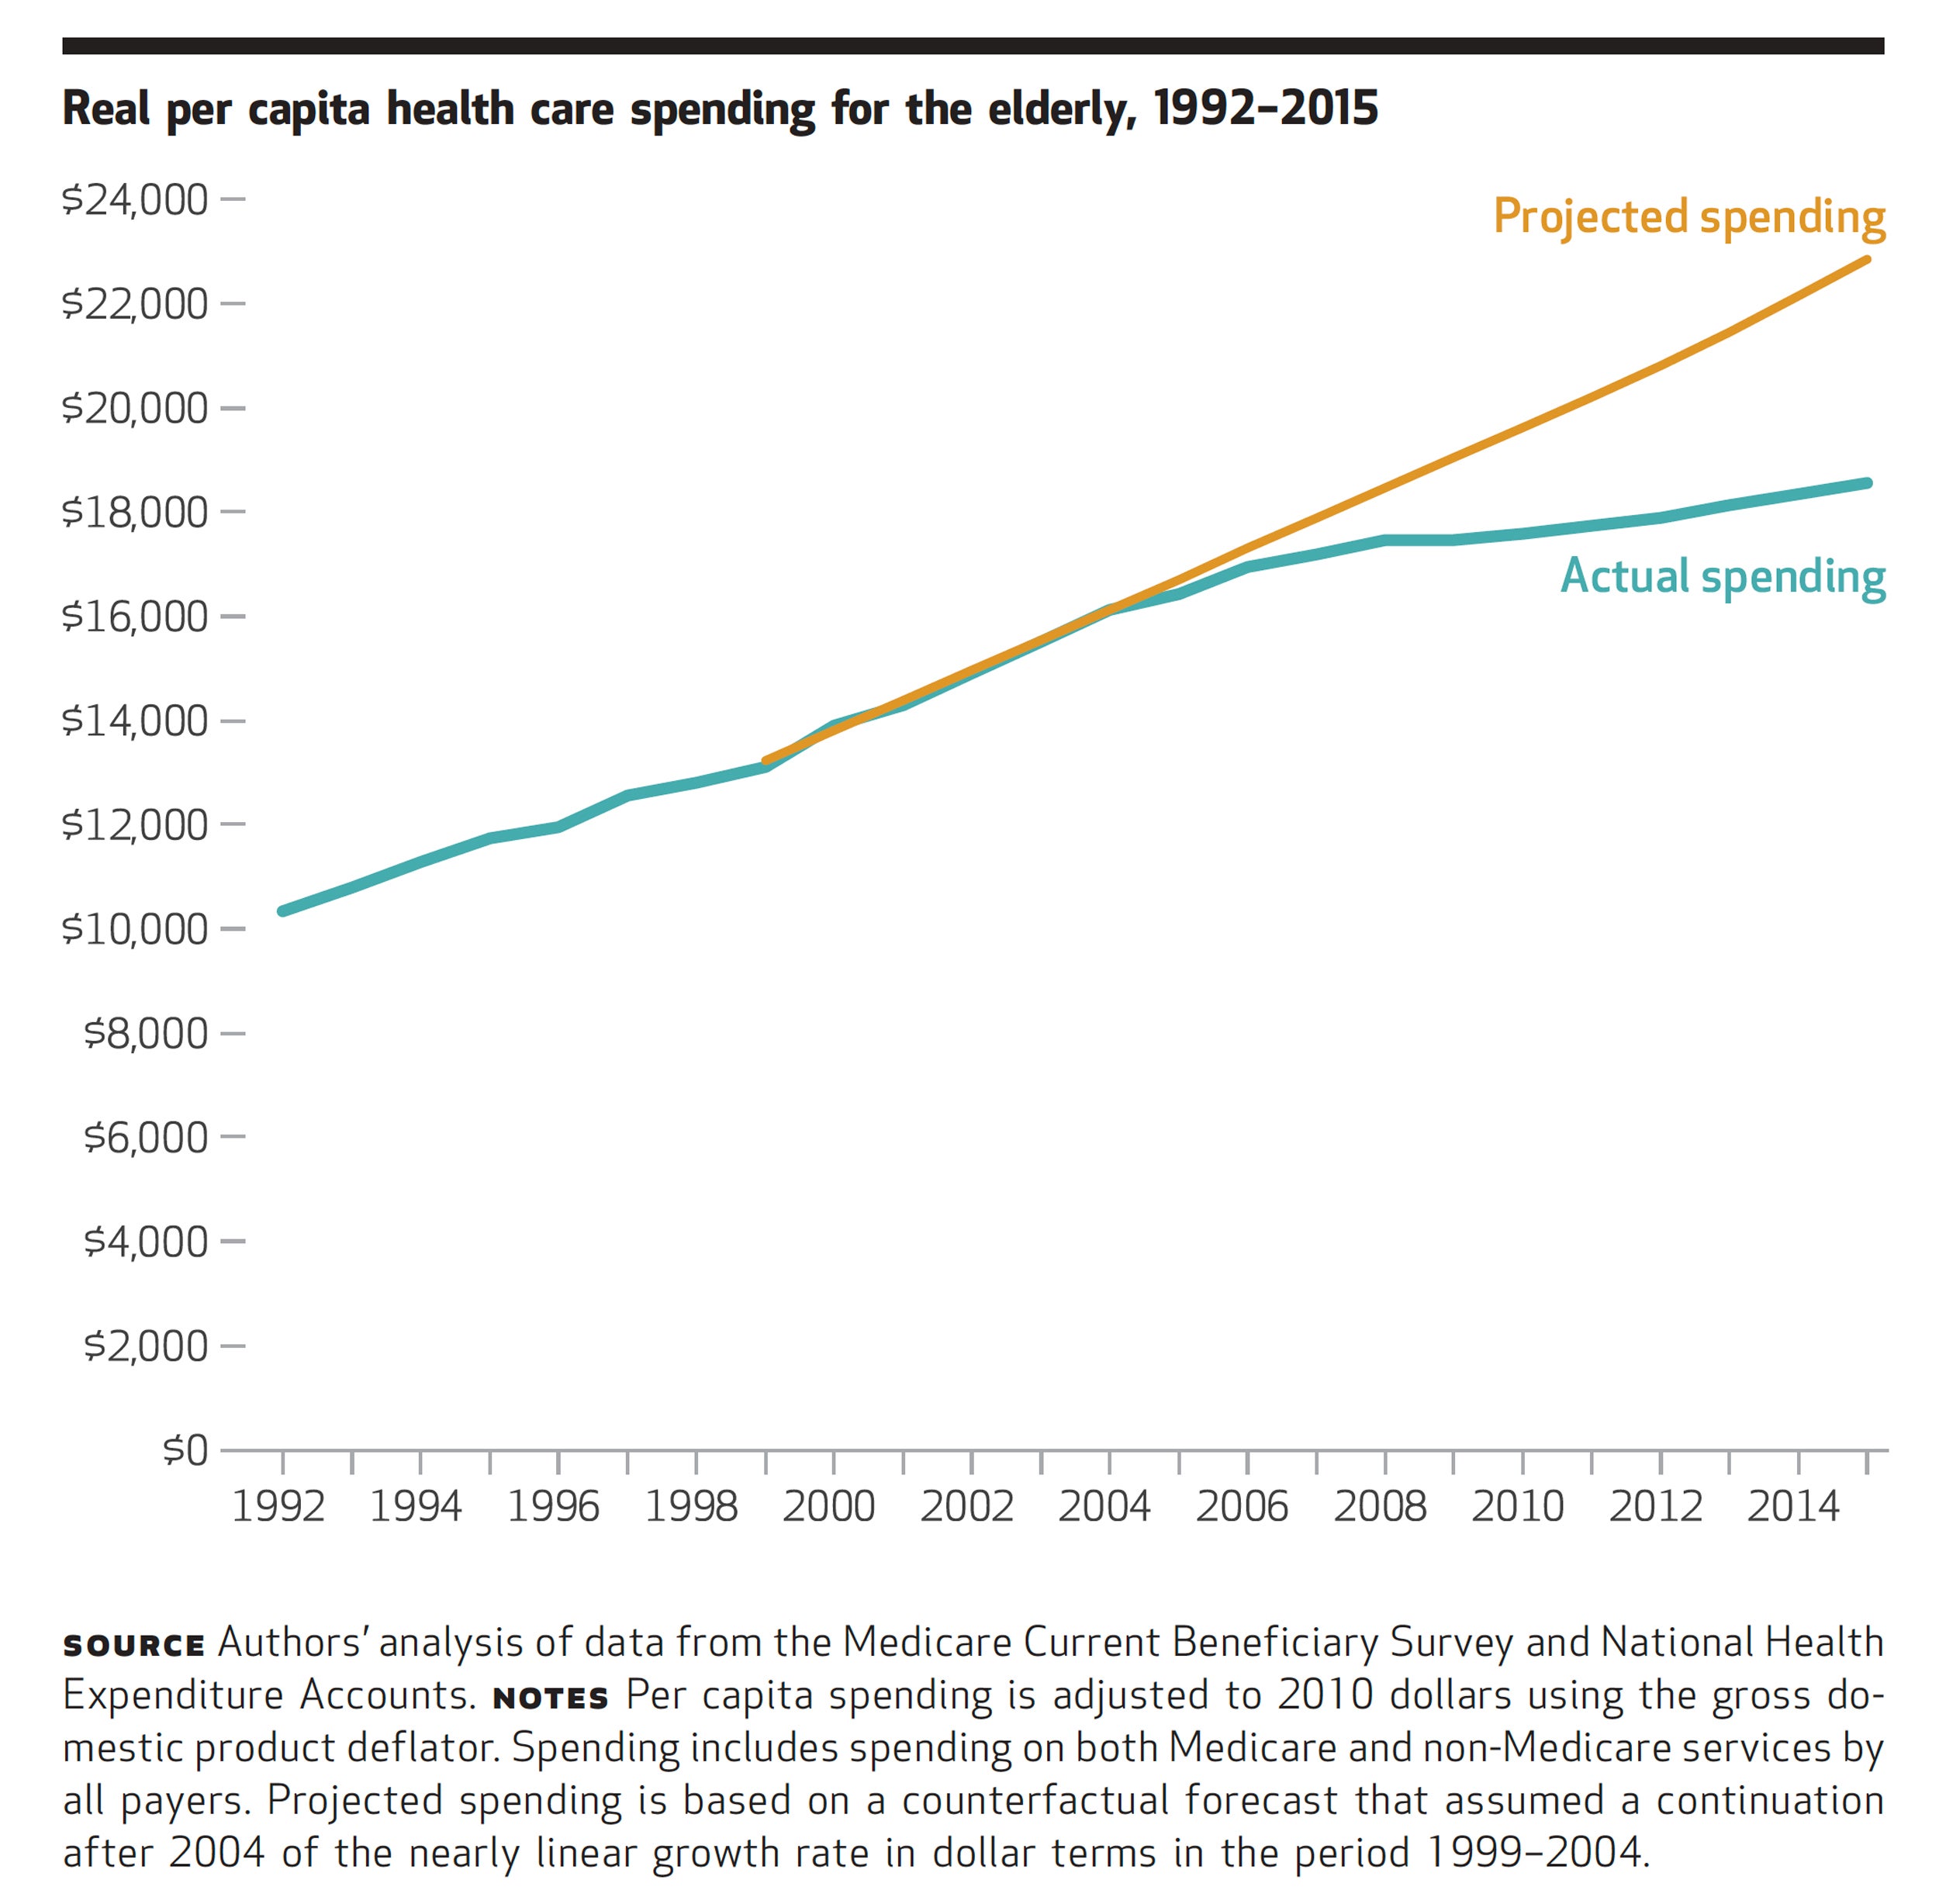 Real Per Capita Health Care Spending for the Elderly 1992-2015